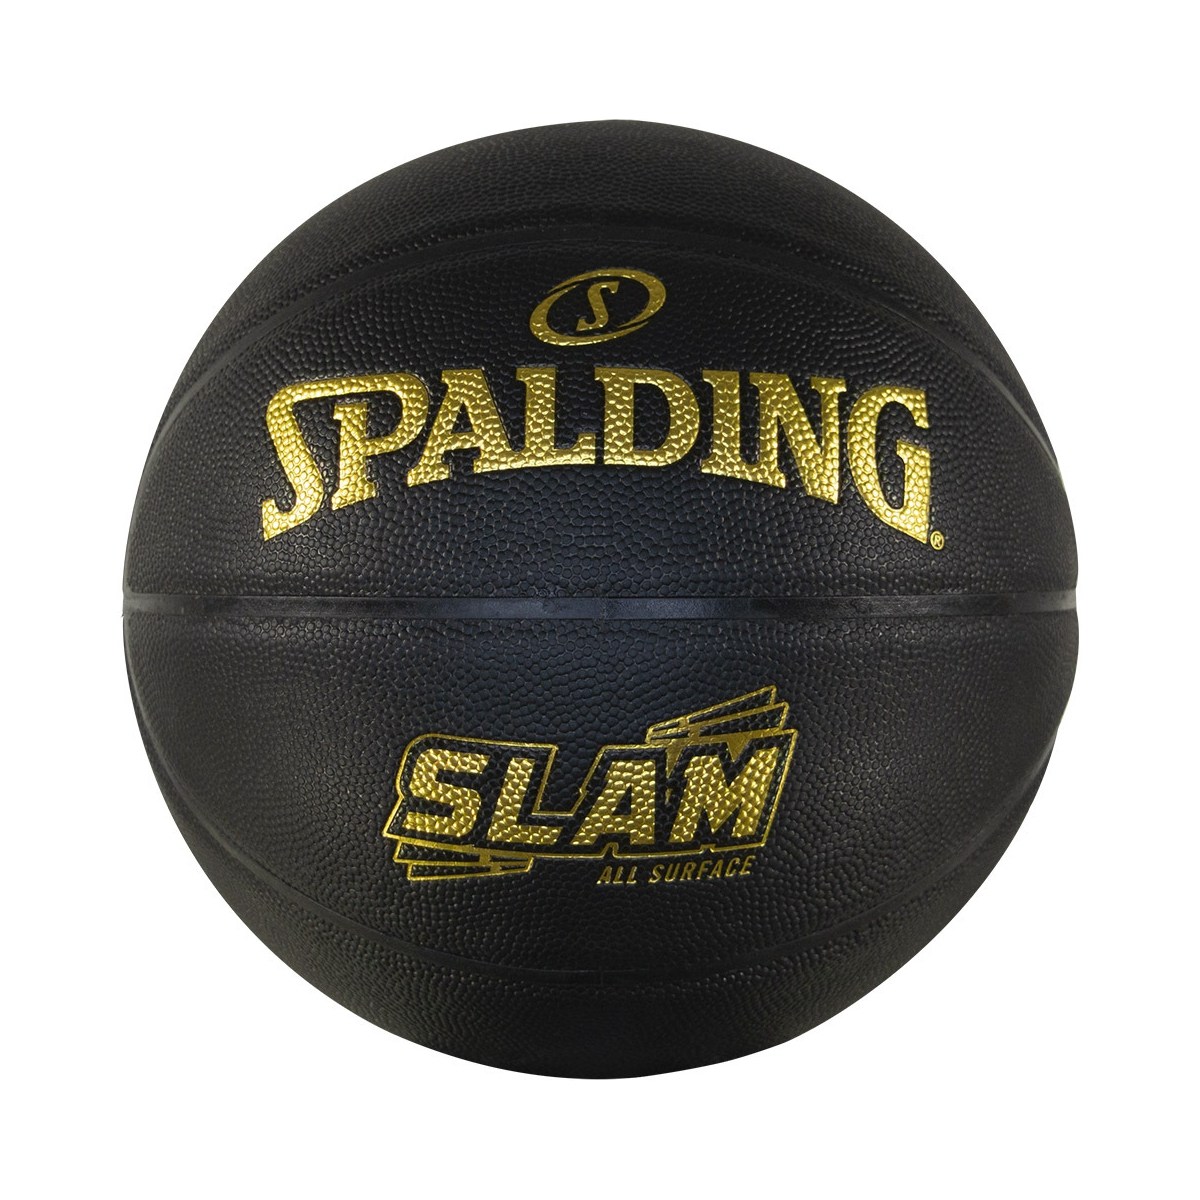 Spalding Size 7 Slam Basketball - Assorted